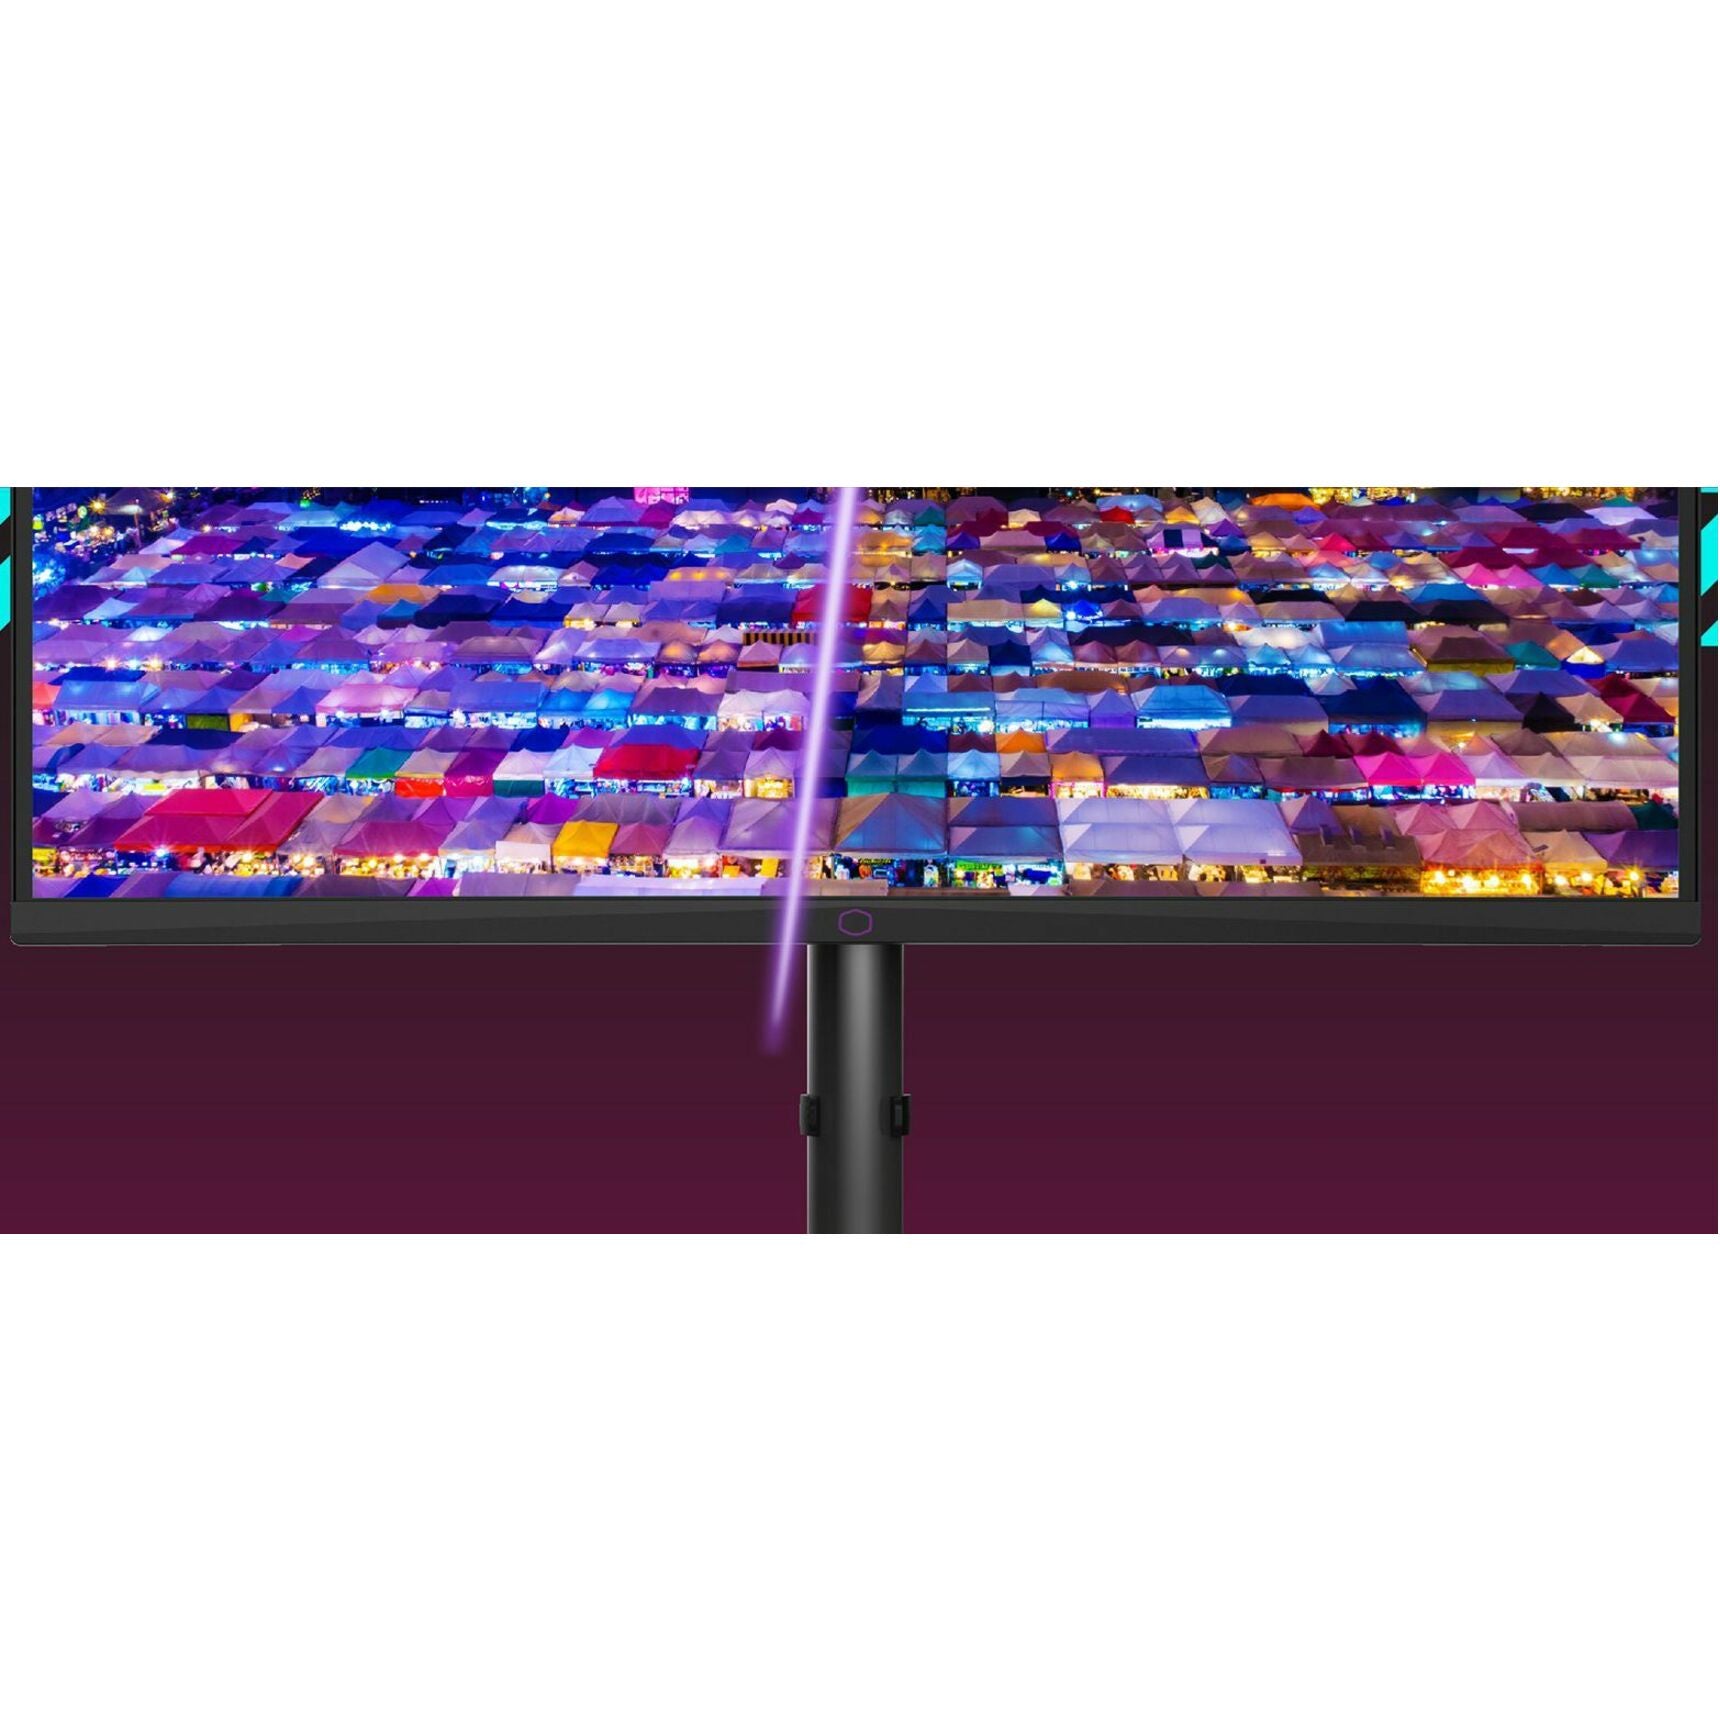 Cooler Master CMI-GM27-CFX-US GM27-CFX Widescreen Gaming LCD Monitor, 27", 240Hz, 1920 x 1080, FreeSync/G-Sync